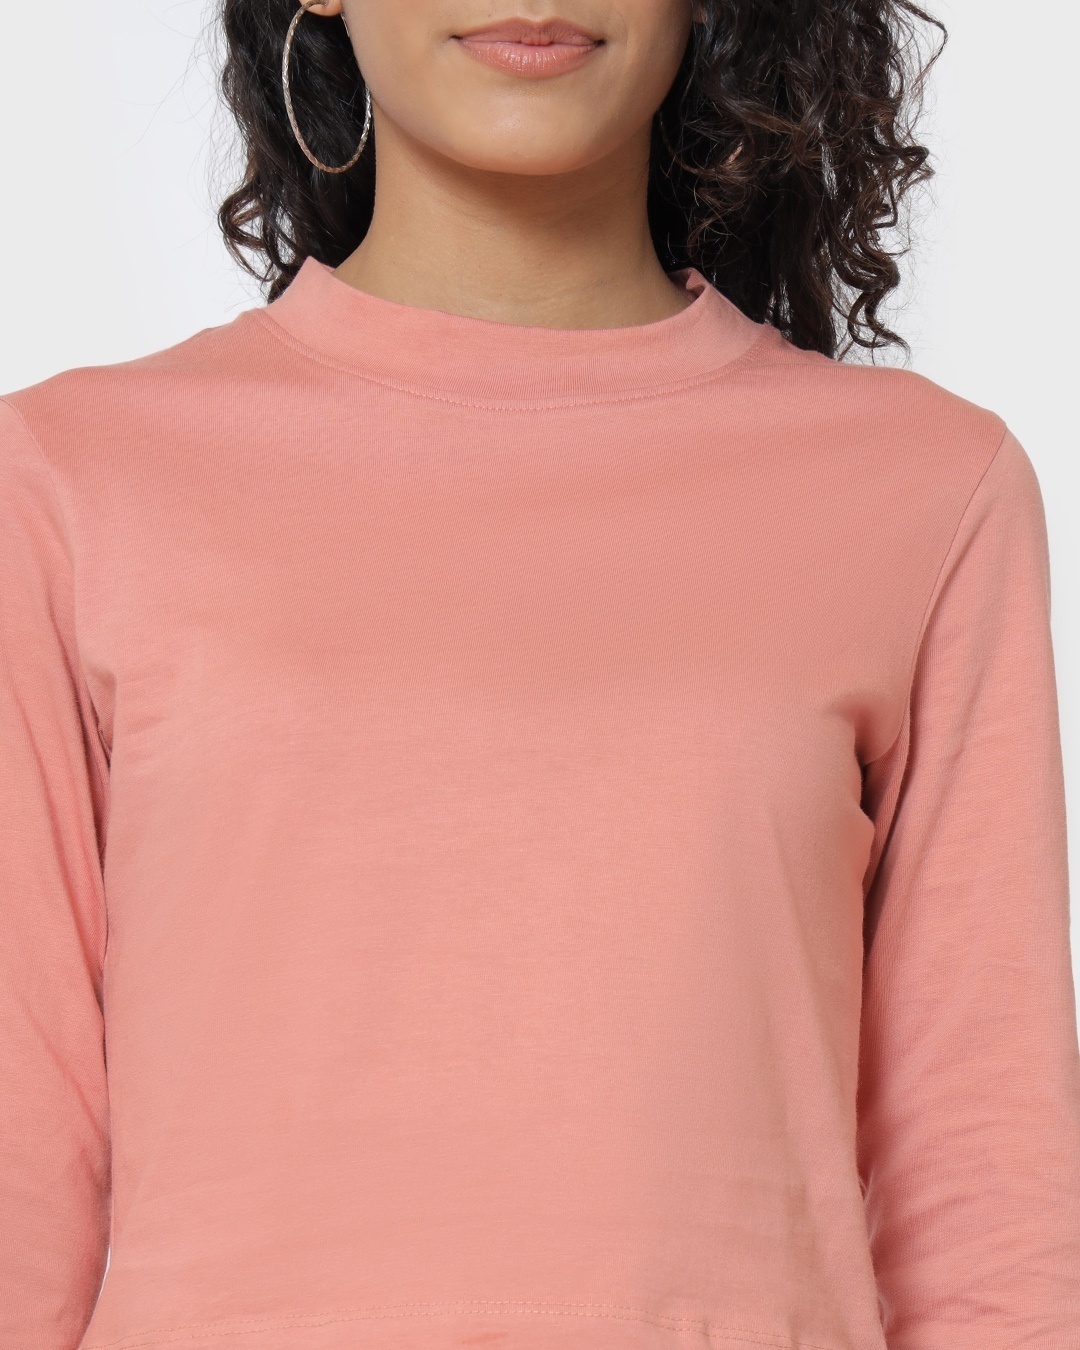 Shop Women's Pink Slim Fit Snug Top